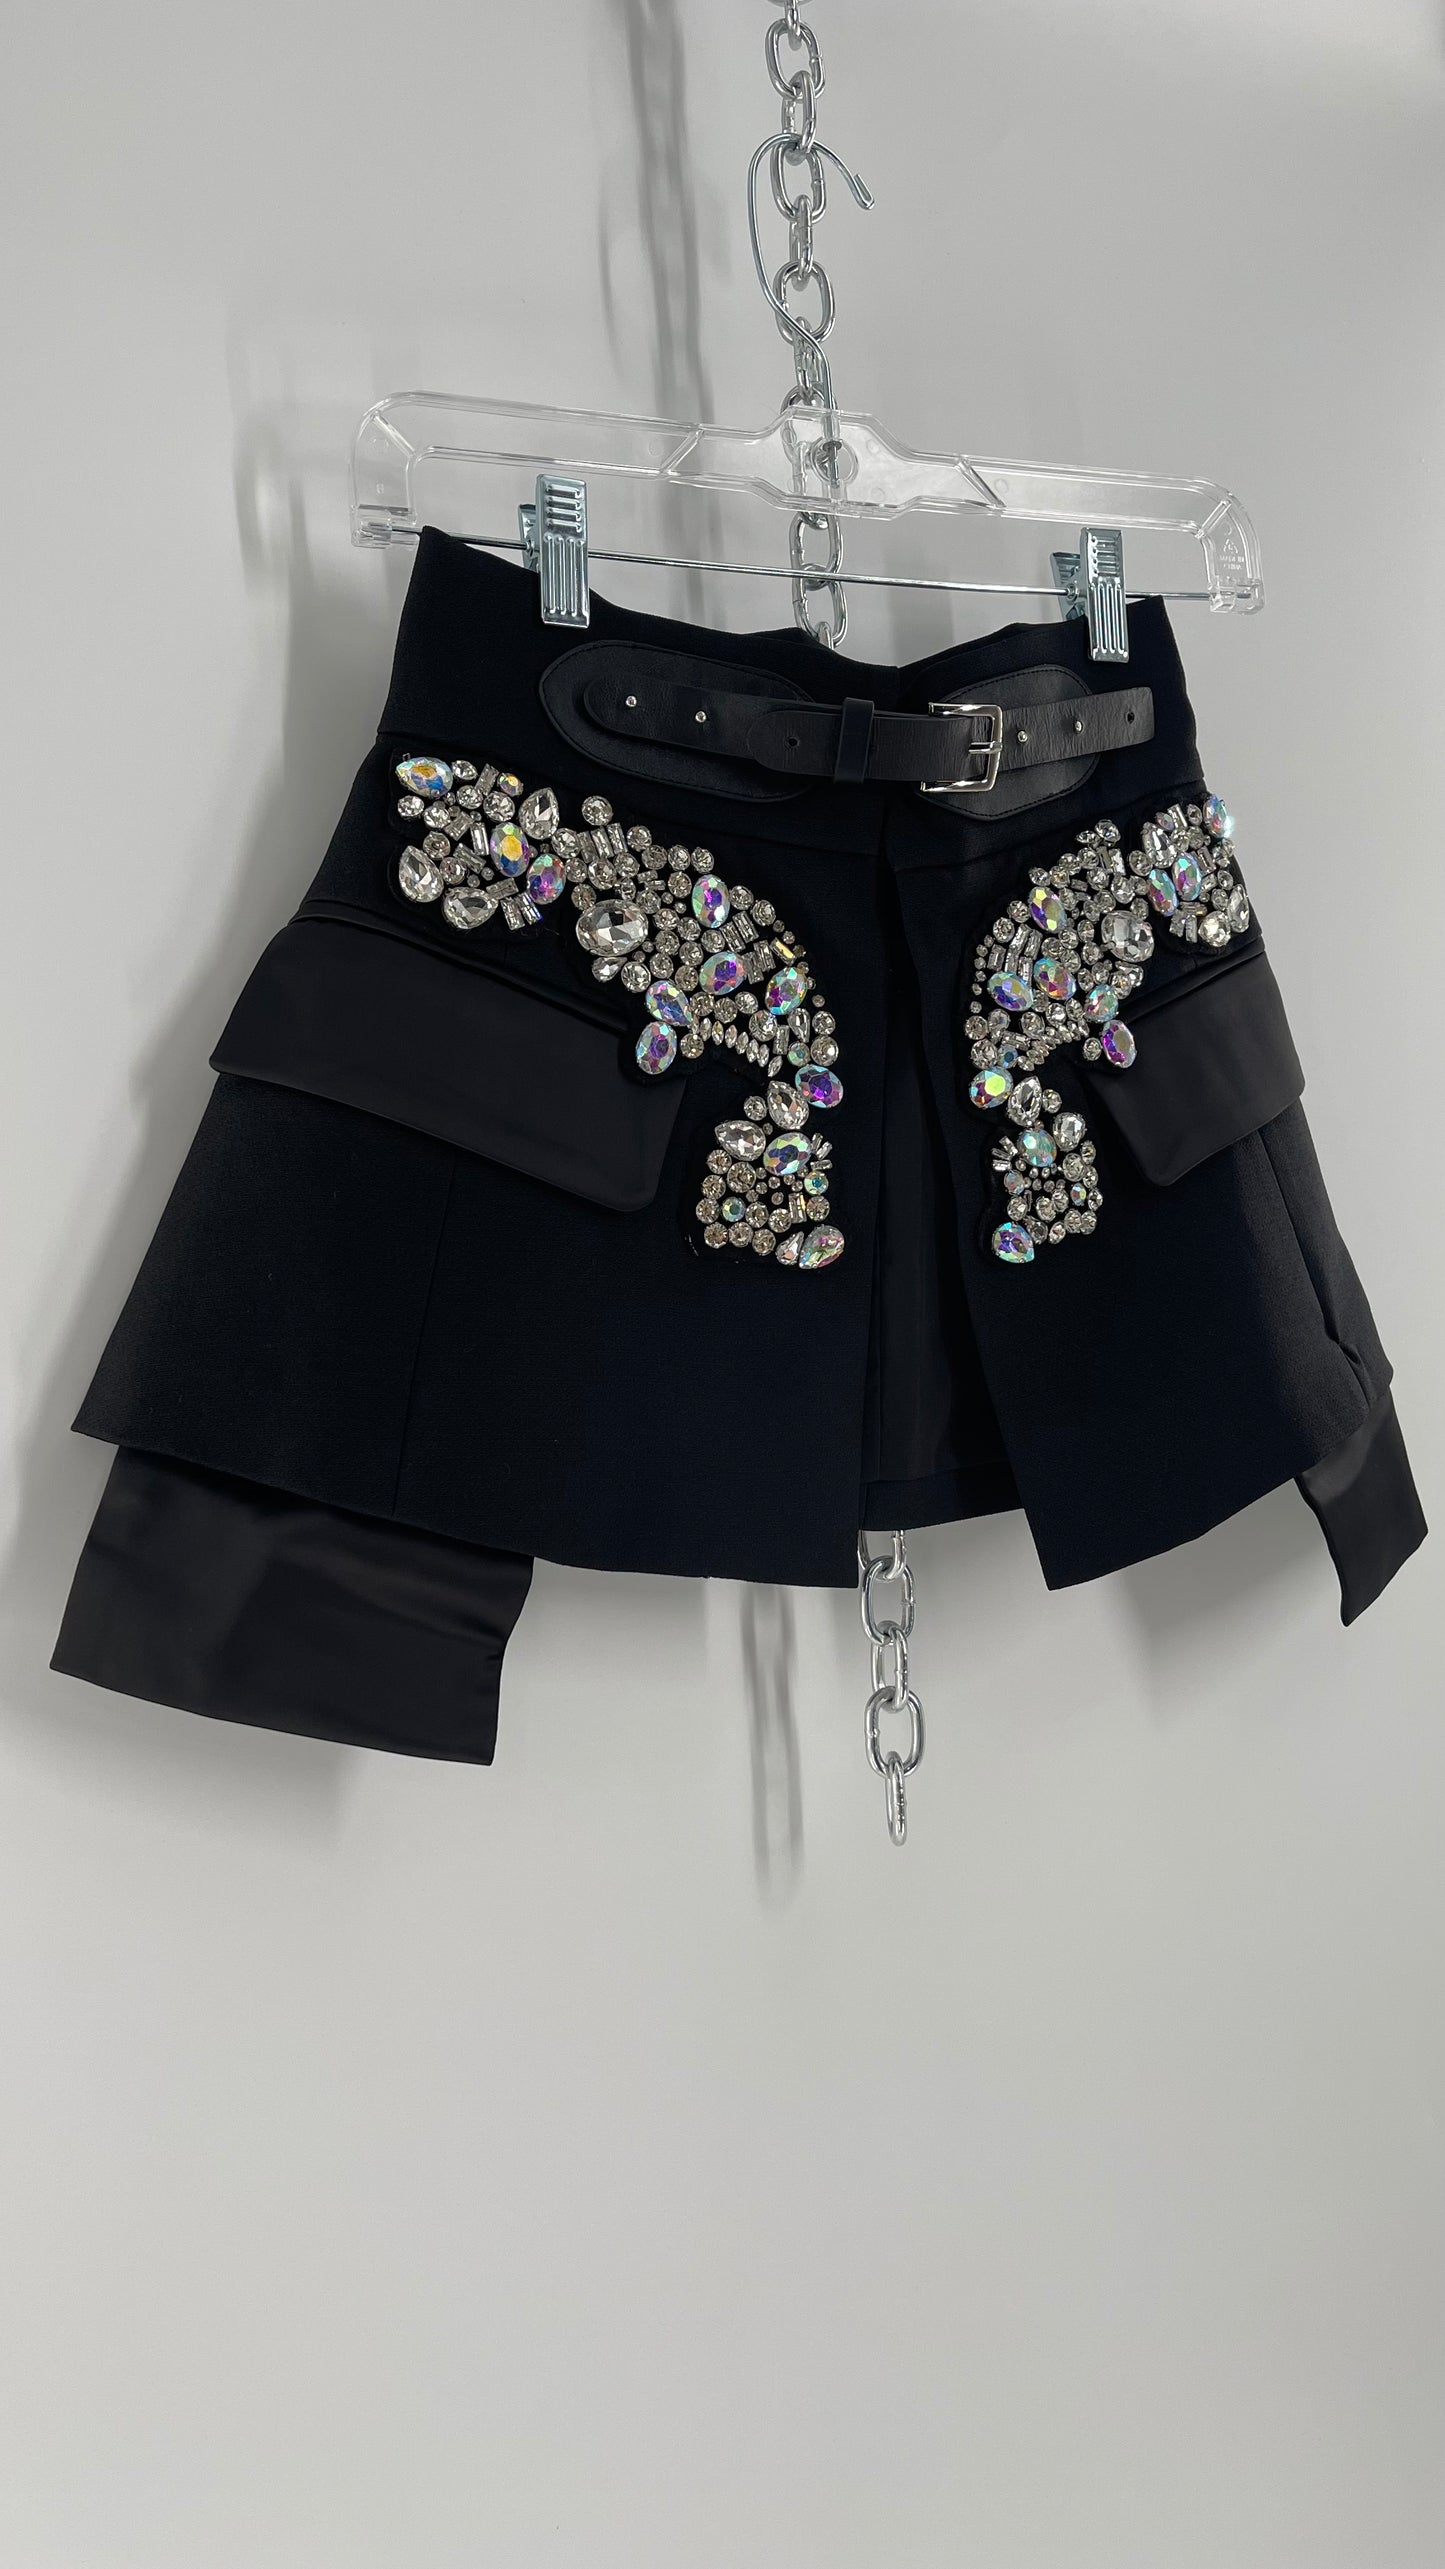 Black Skirt Belt Covered in Crystal Embellishments with Satin Flap Pockets (Medium)